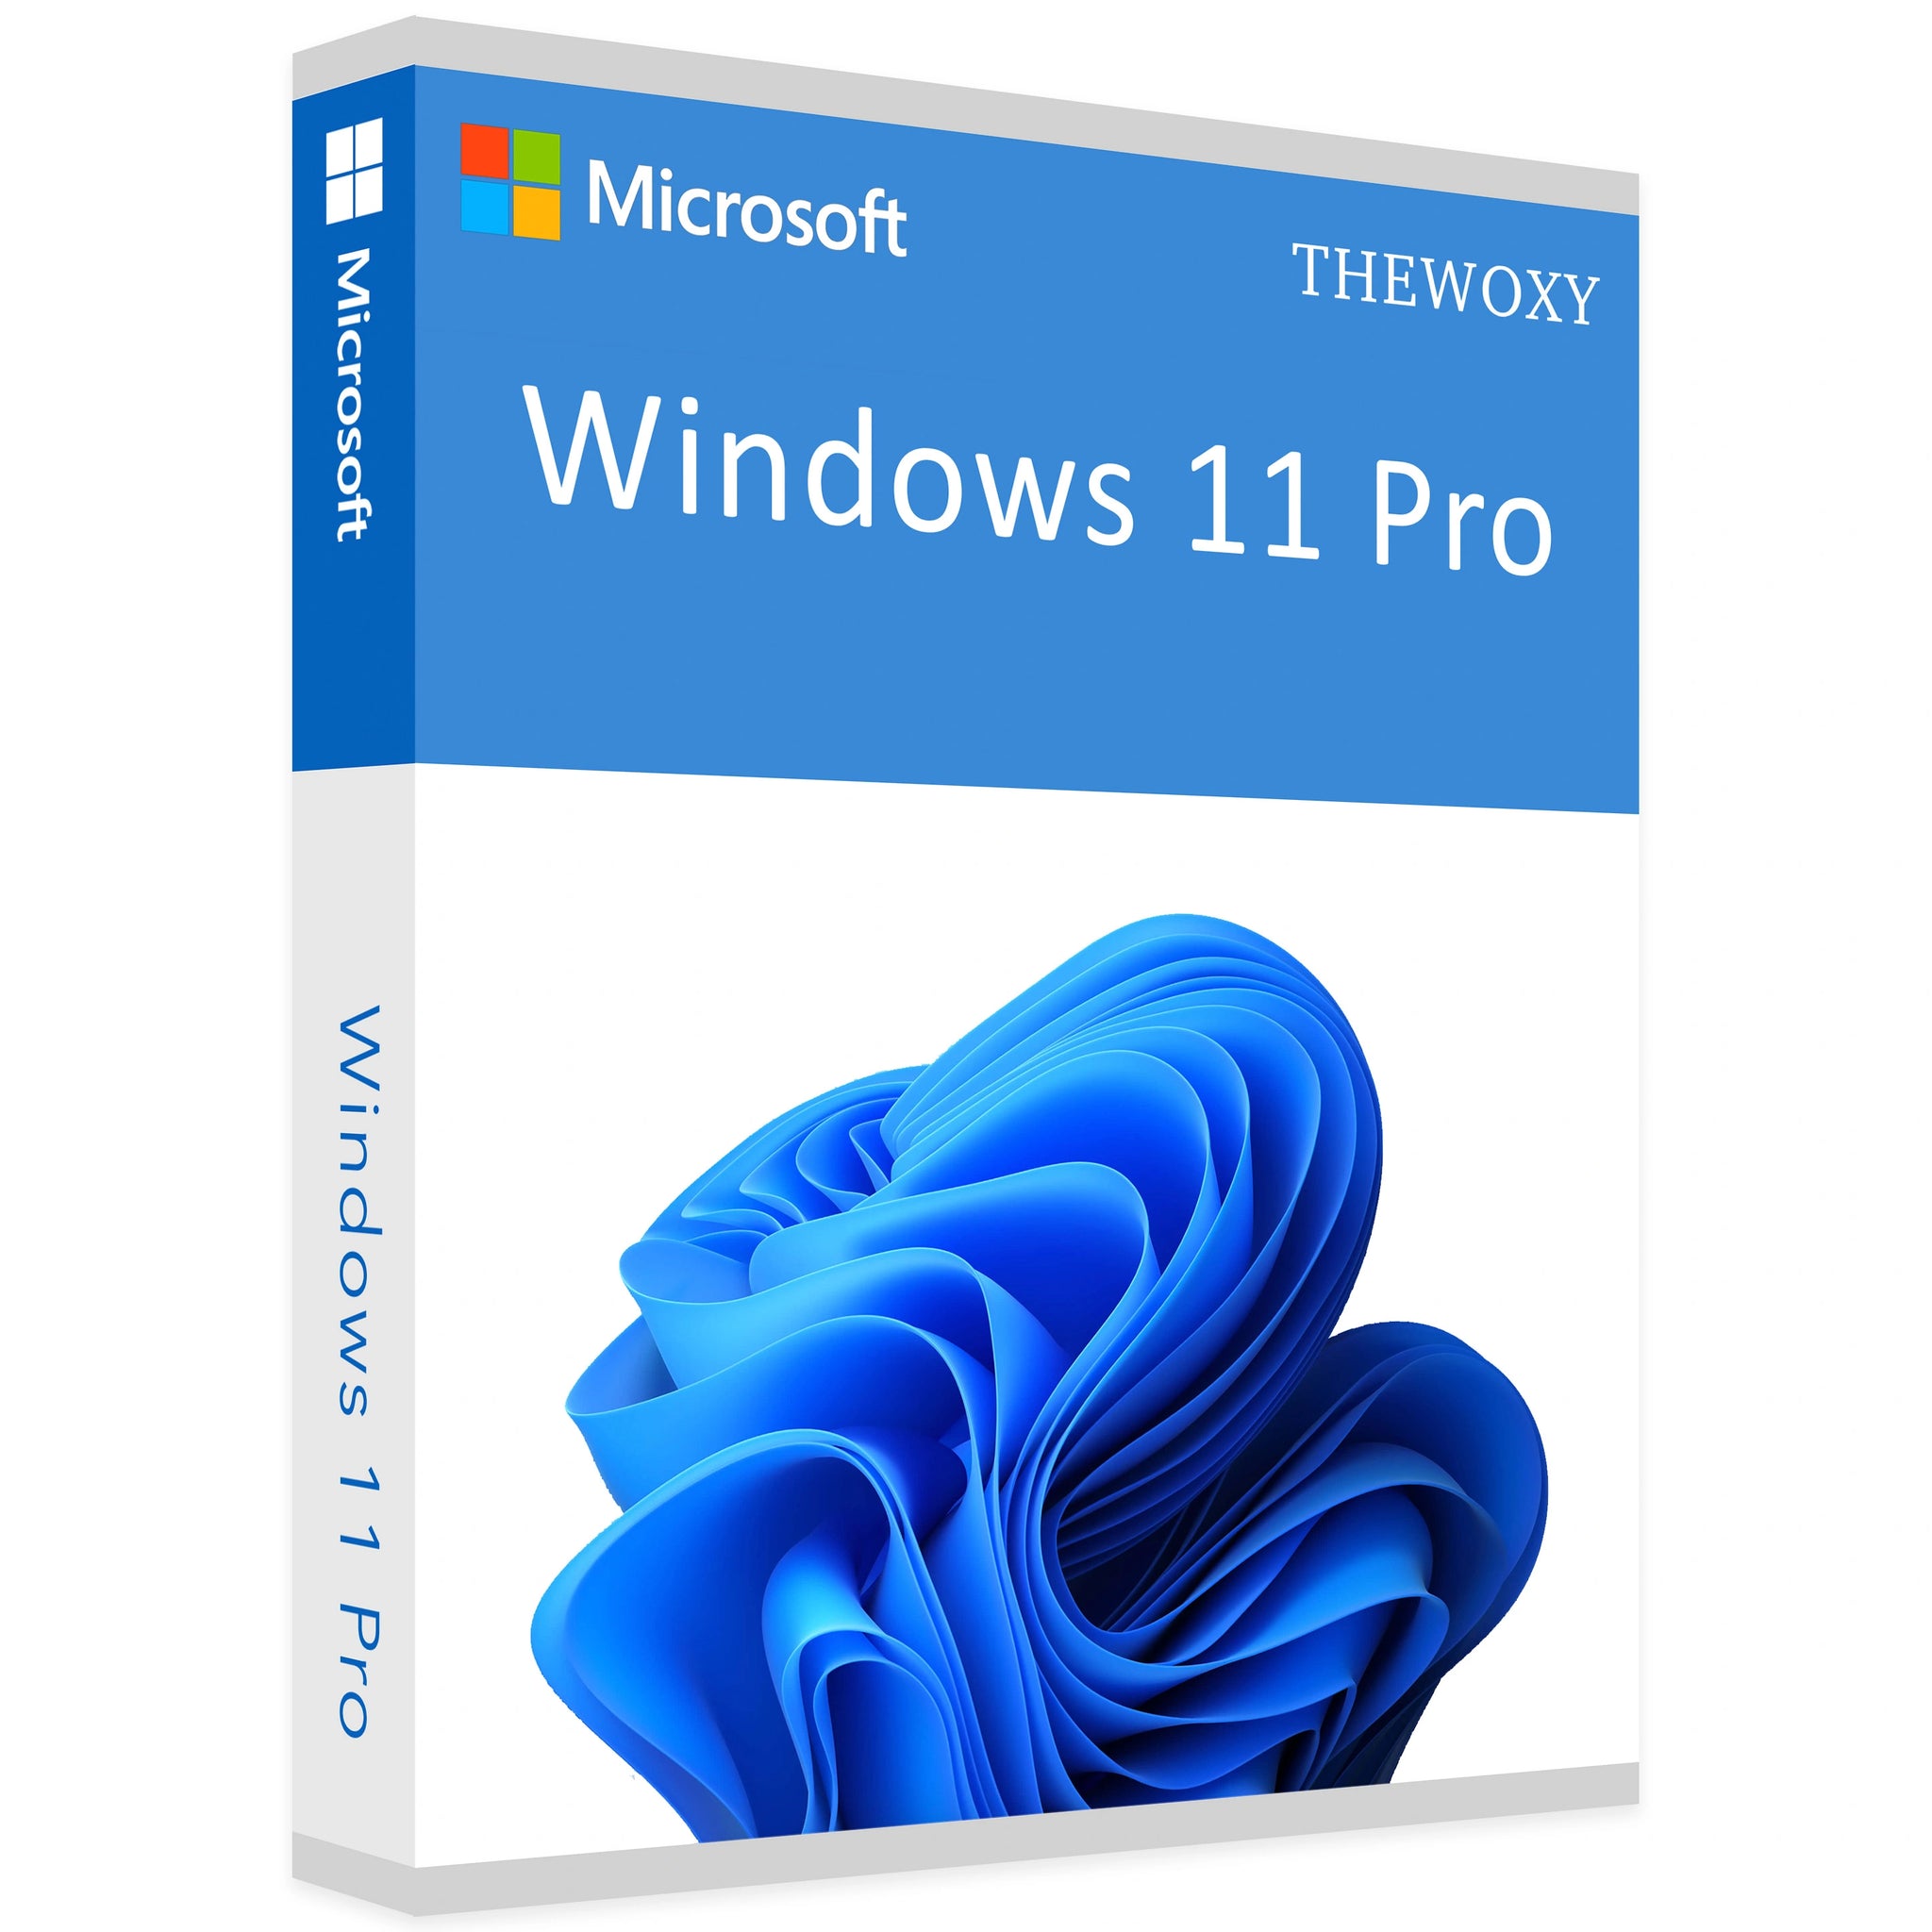 Microsoft Windows 11 Pro - Lifetime License Key for 1 PC